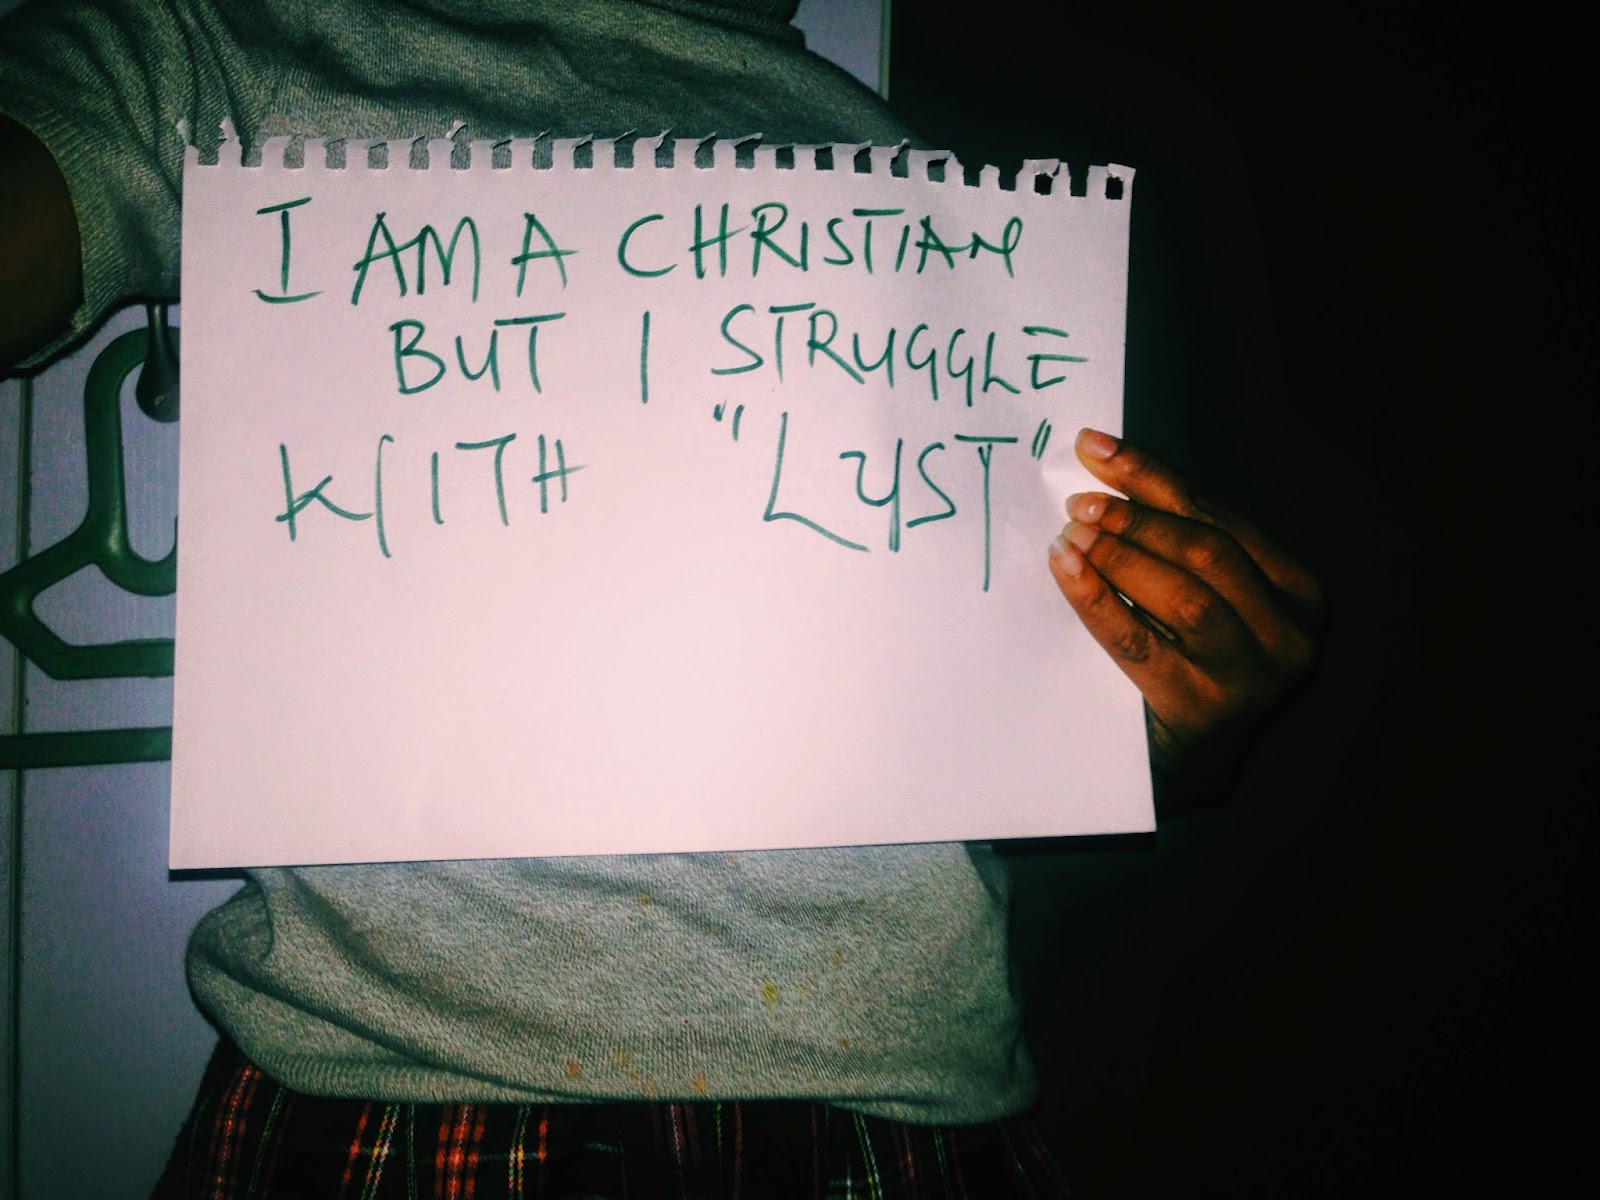 #IAM A CHRISTIAN BUT I STRUGGLE WITH